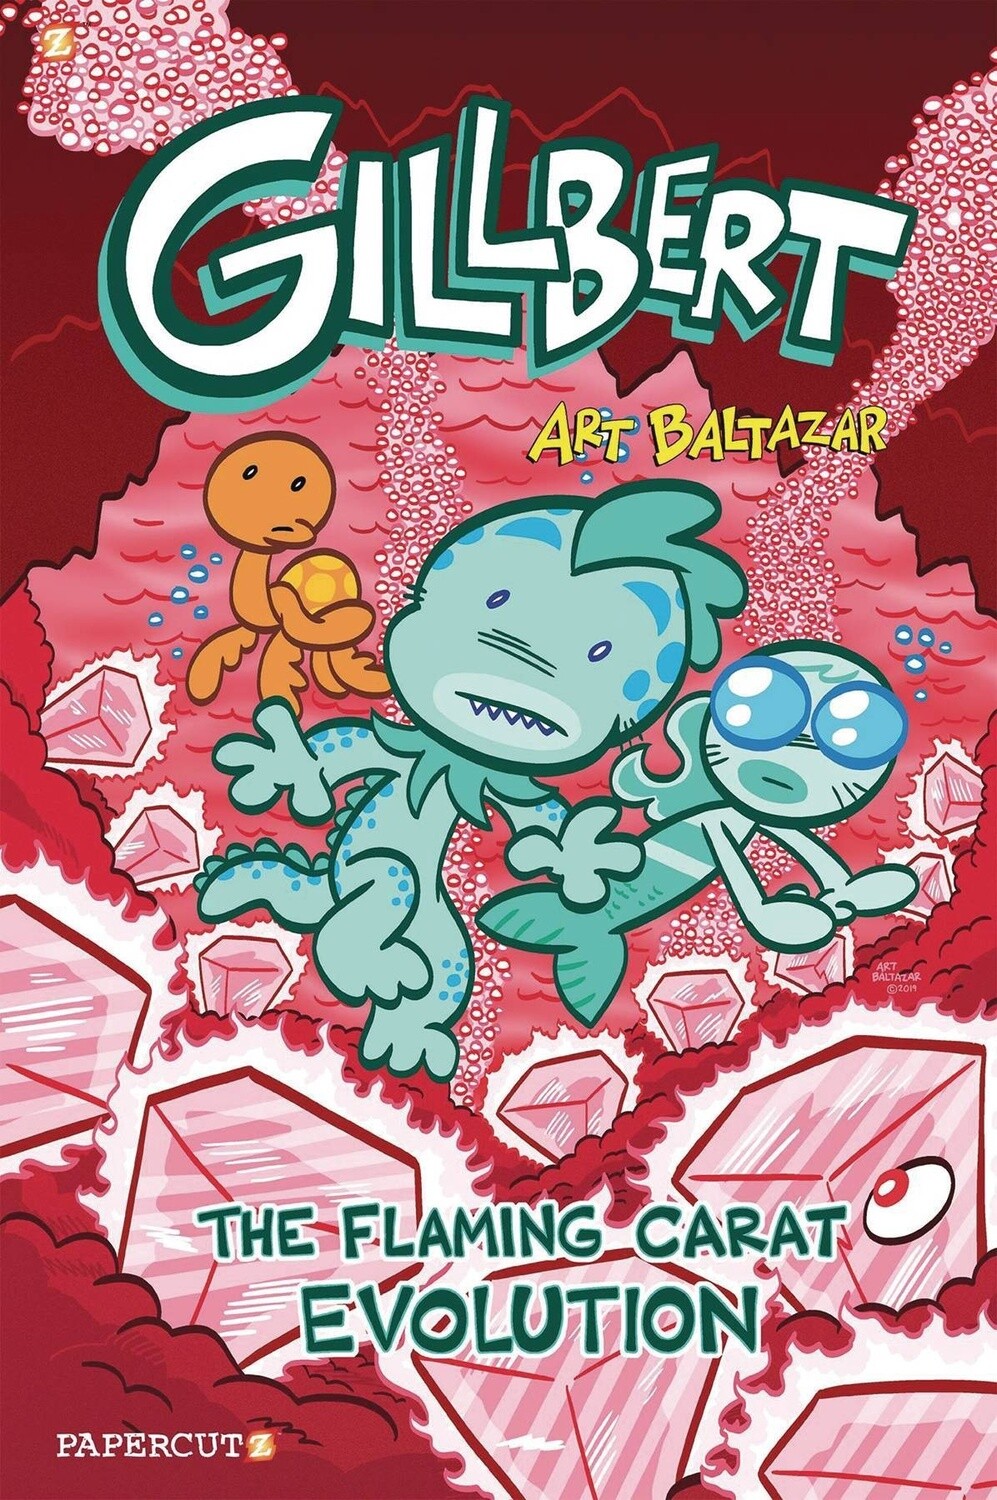 Gillbert: The Little Merman Vol. 3 Flaming Carats Evolution